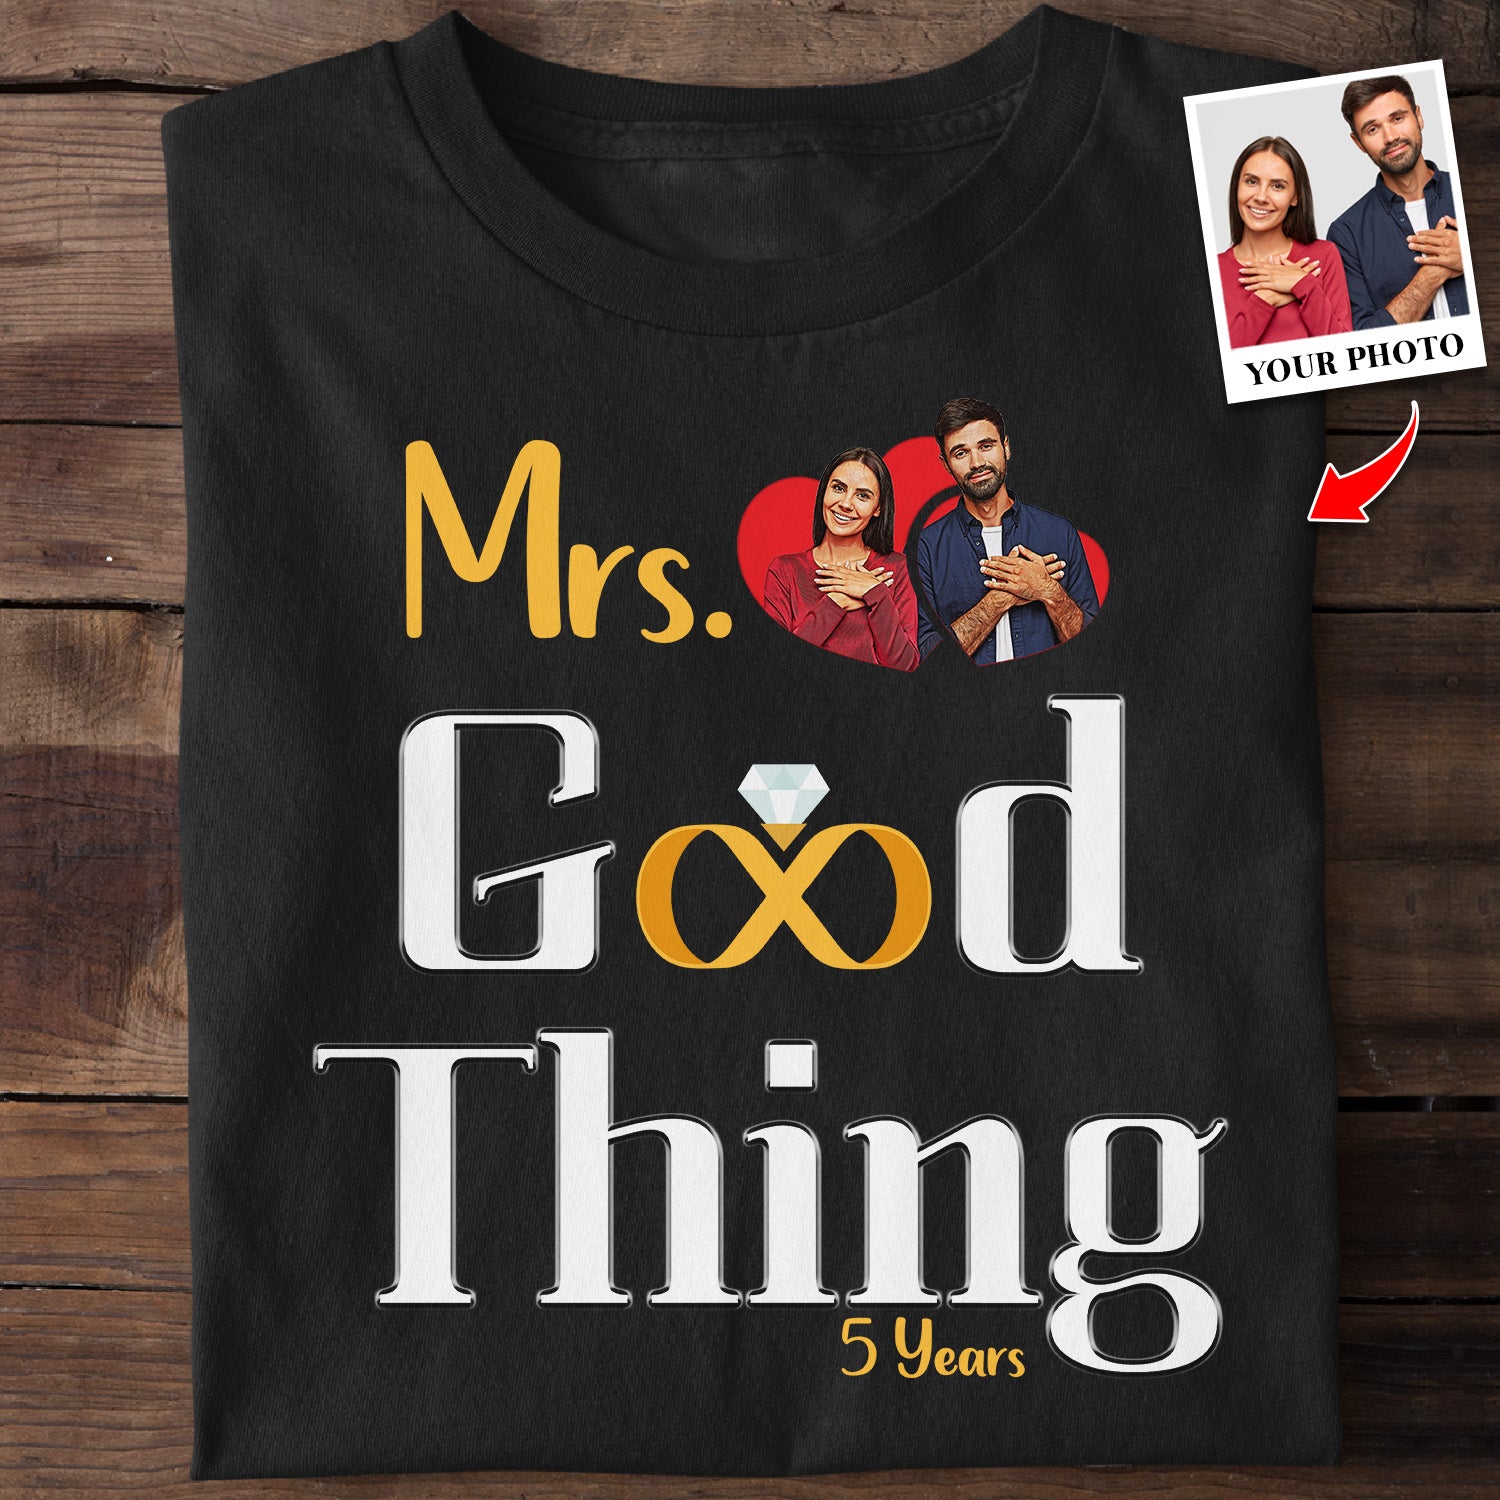 Personalized Photo And Year, Mrs. Good Thing, Custom Shirts